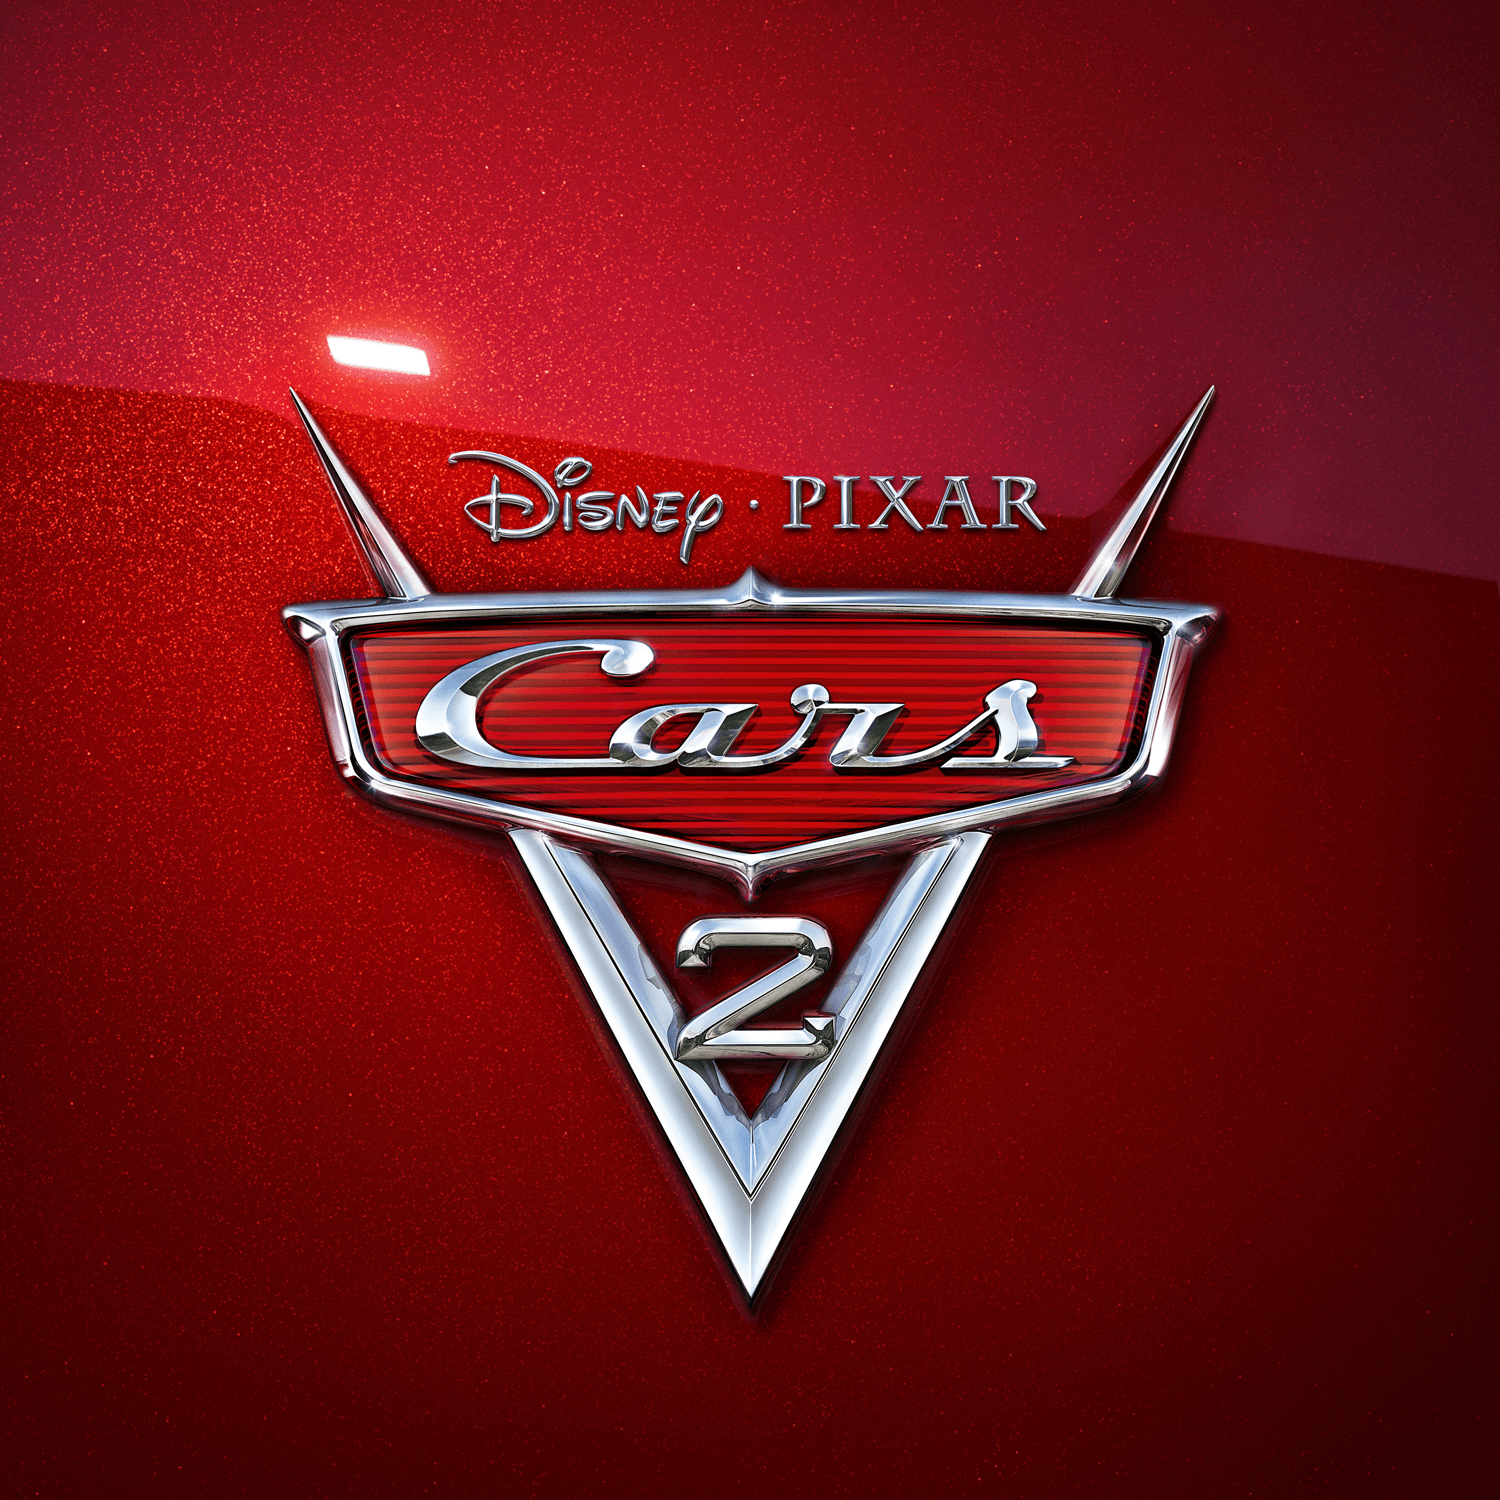 Cars 2 Logo - Cars 2 Updated Logo